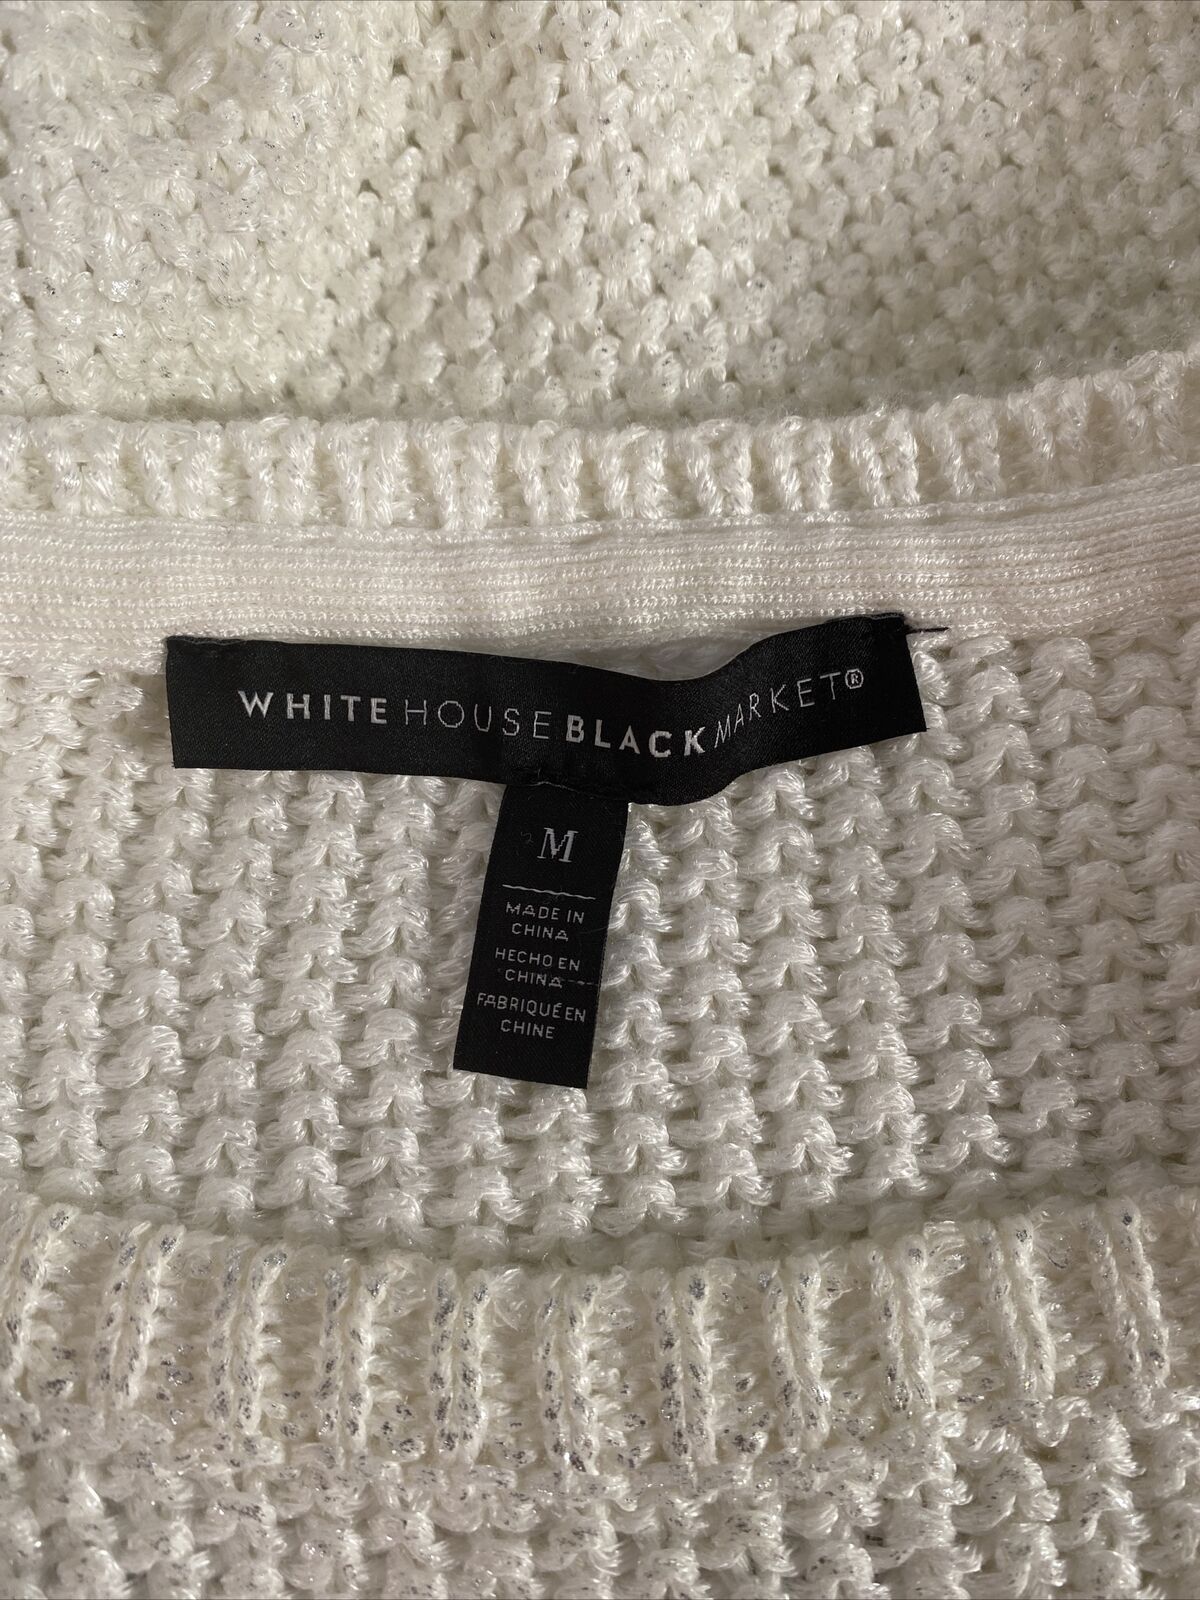 White House Black Market Women's White Metallic-Foil Knit Sweater Sz M